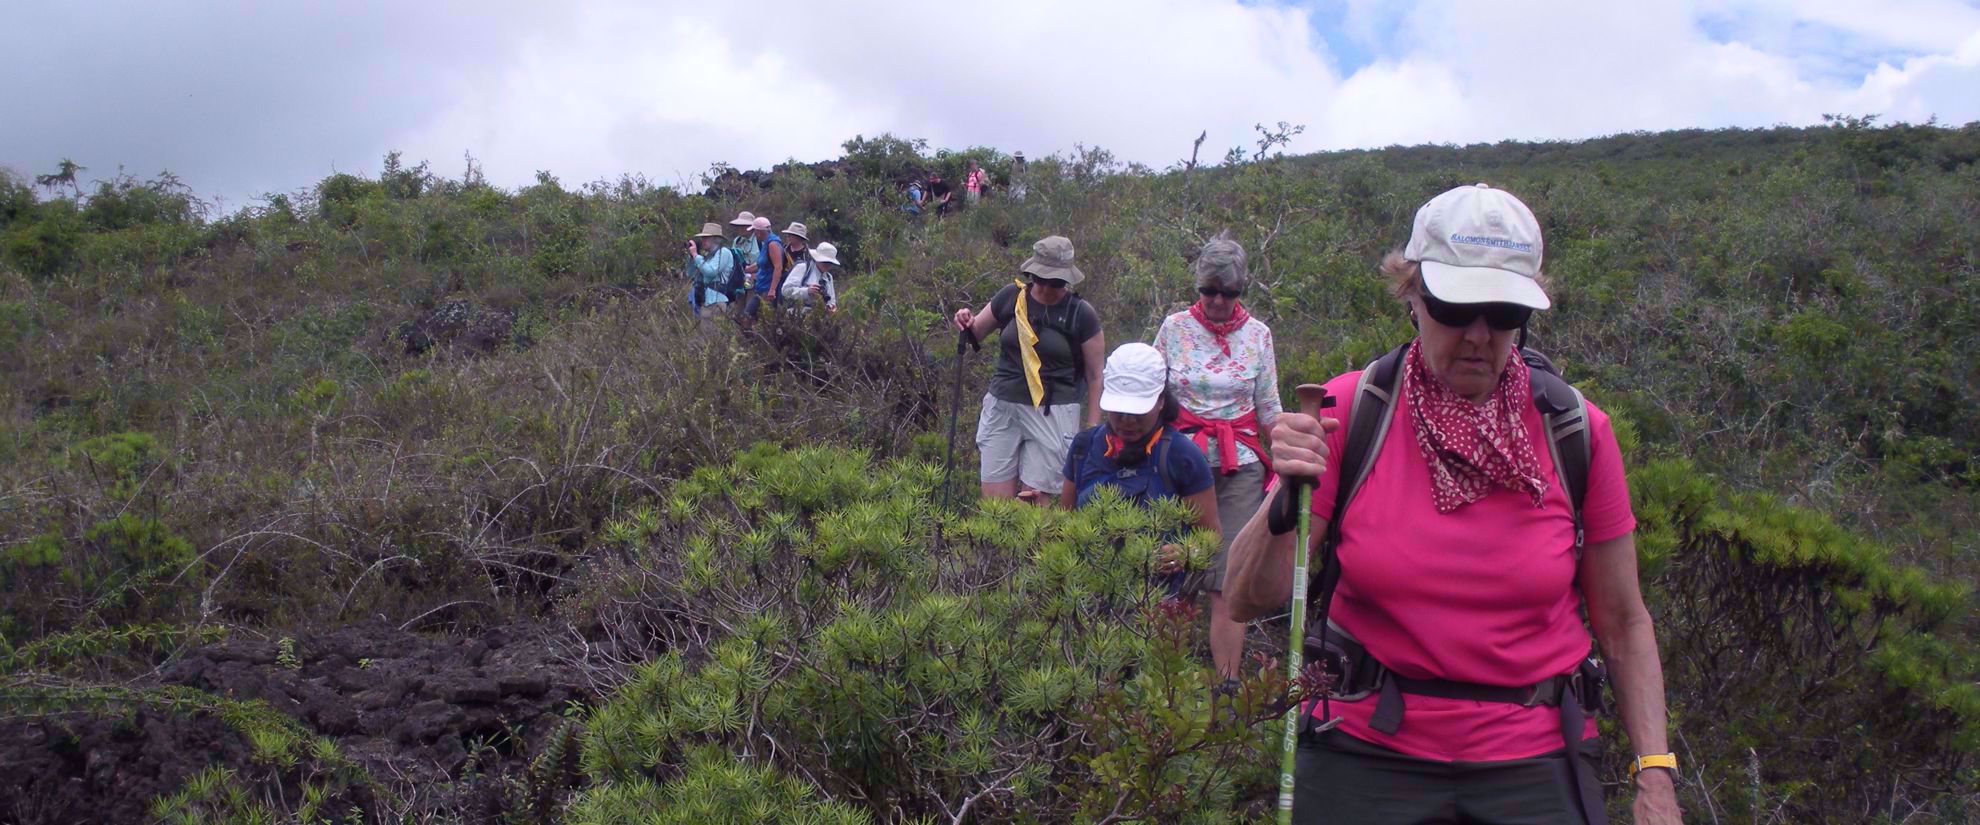 women on travel tour hiking through galapagos